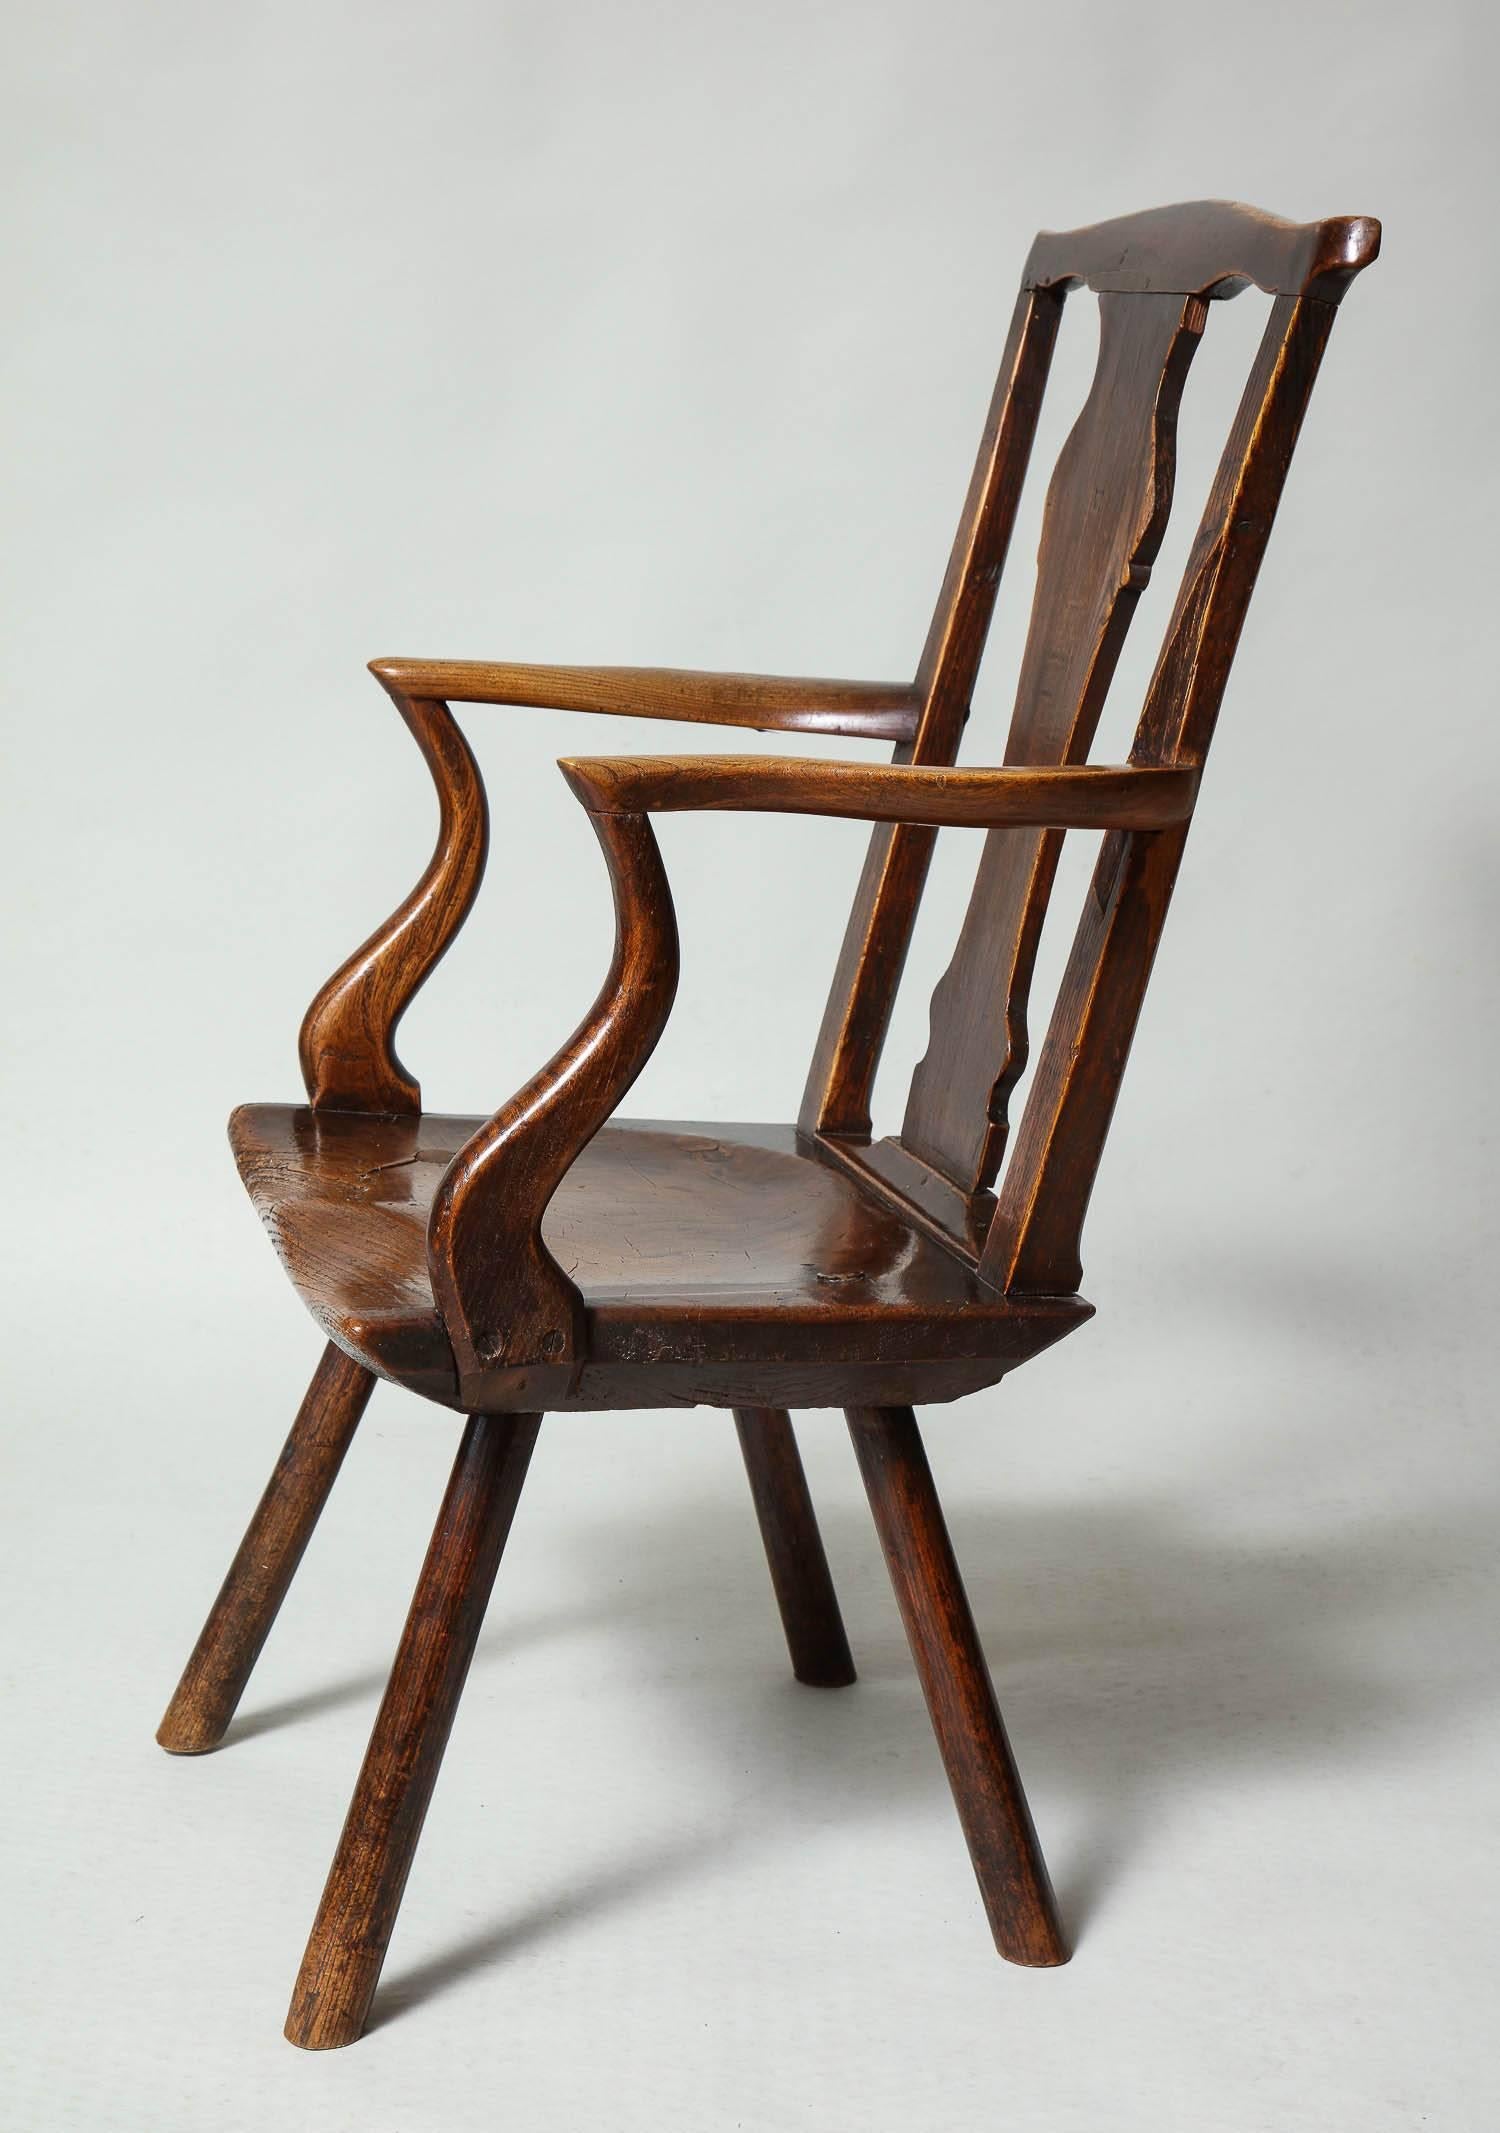 Great Britain (UK) Rare Welsh Silhouette Chair